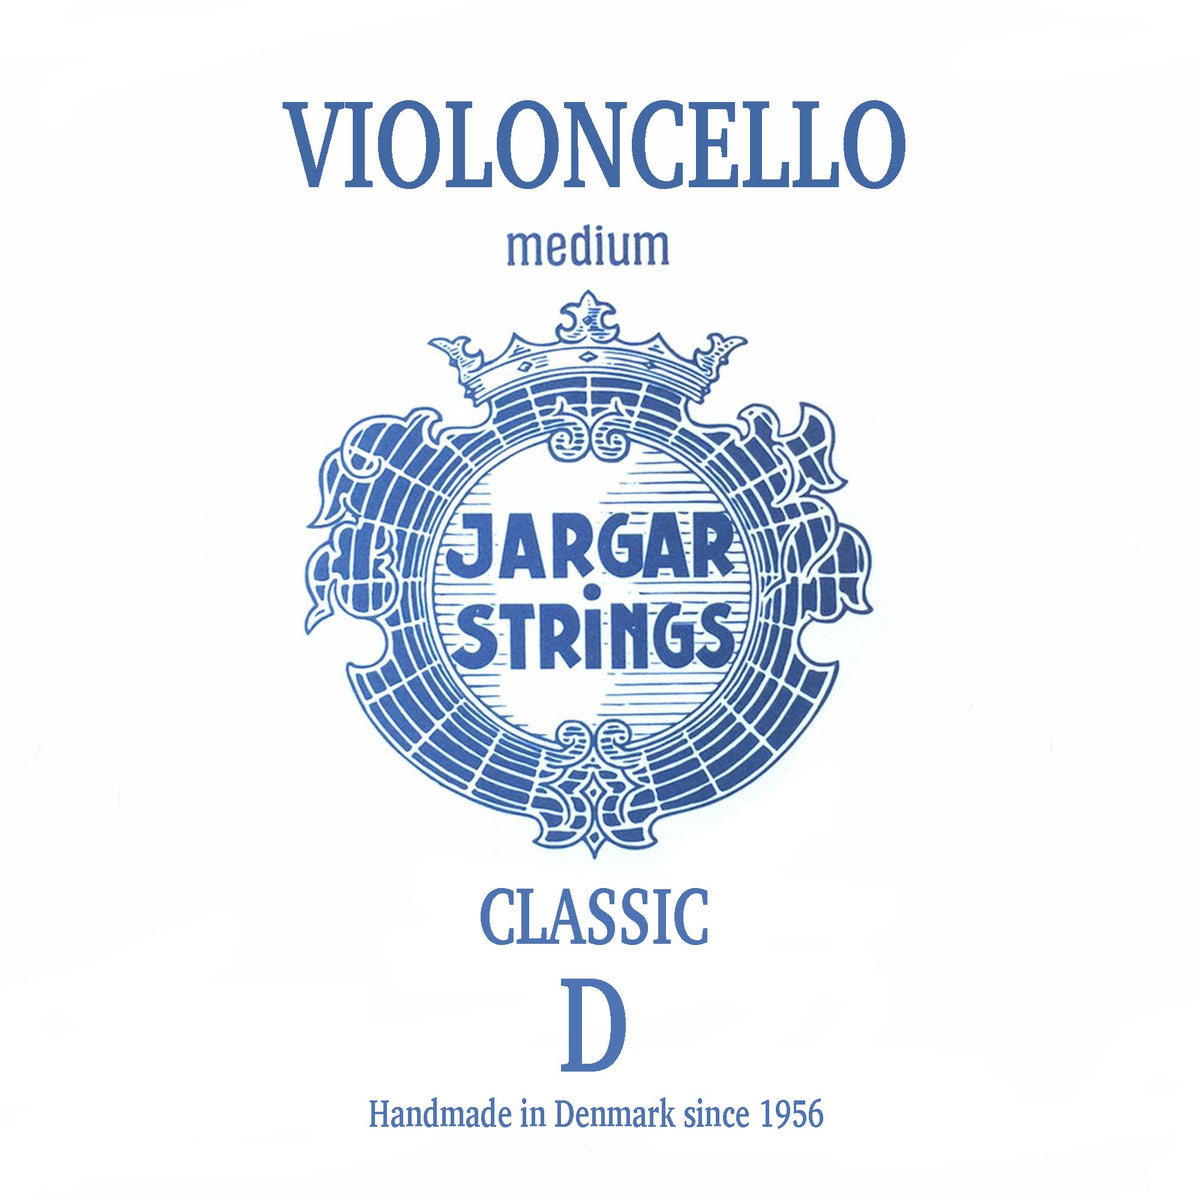 Jargar Classic Cello D String